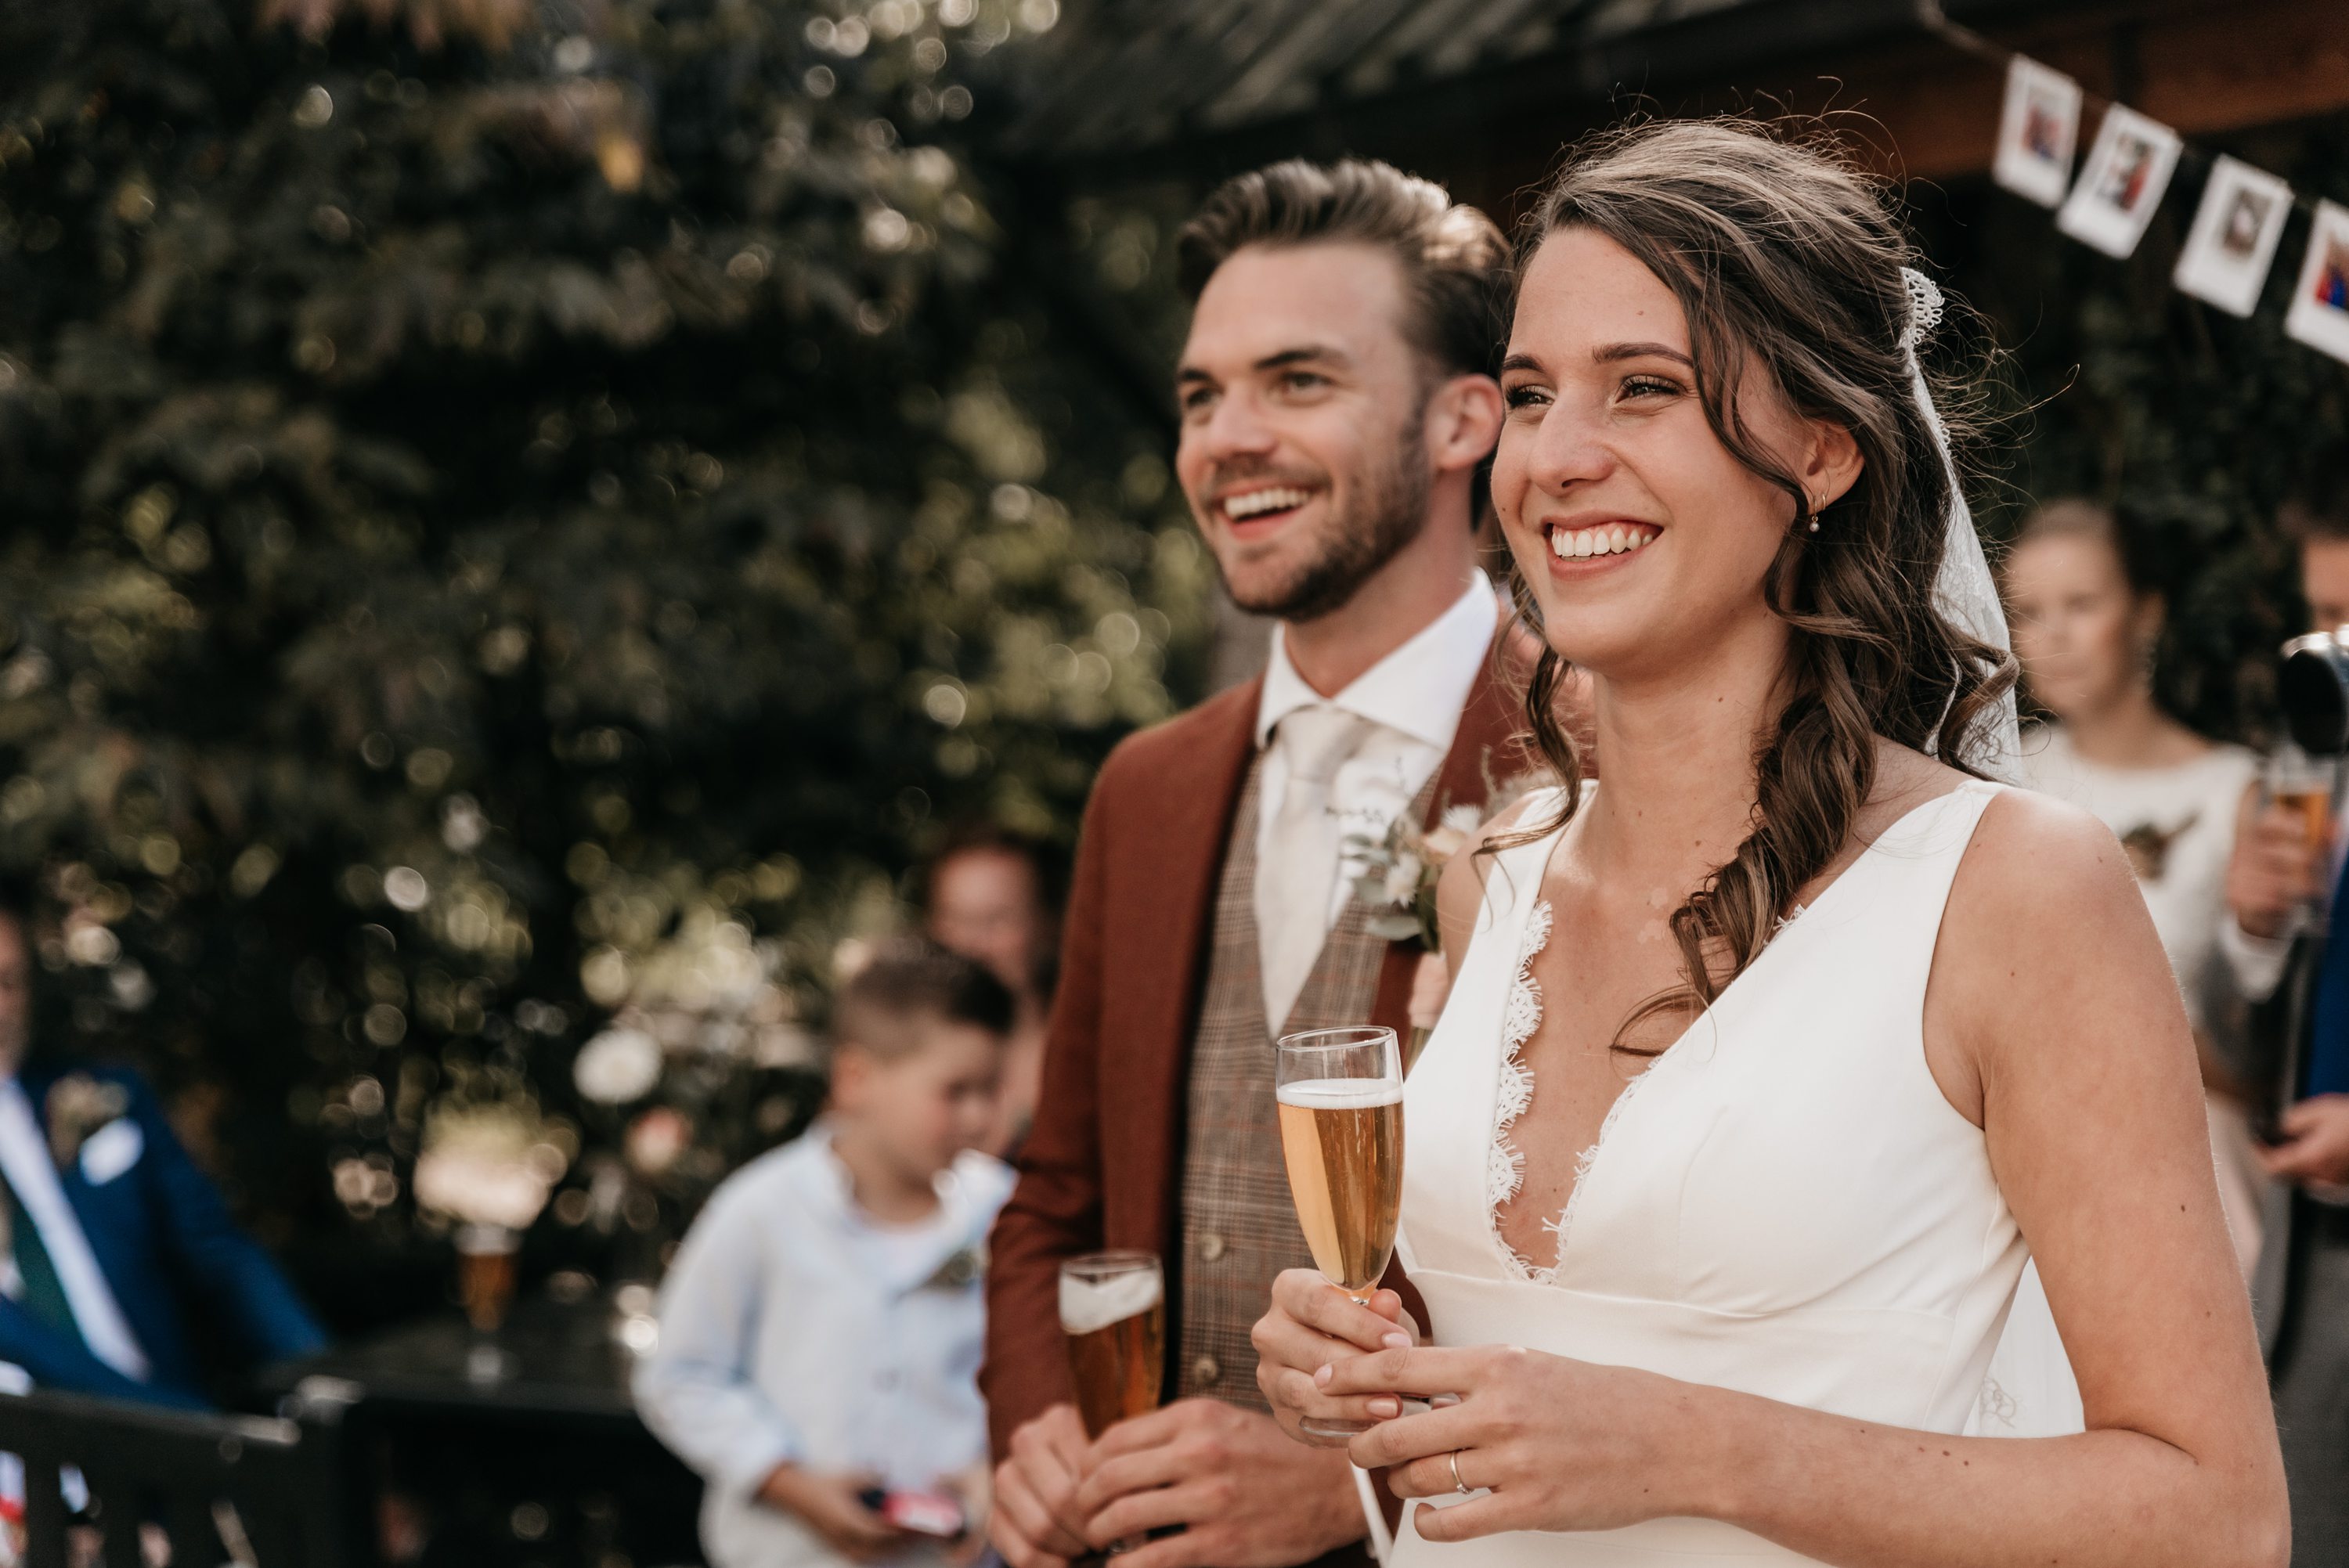 slot-doddendael-bruiloft-trouwfotograaf-louise-boonstoppel